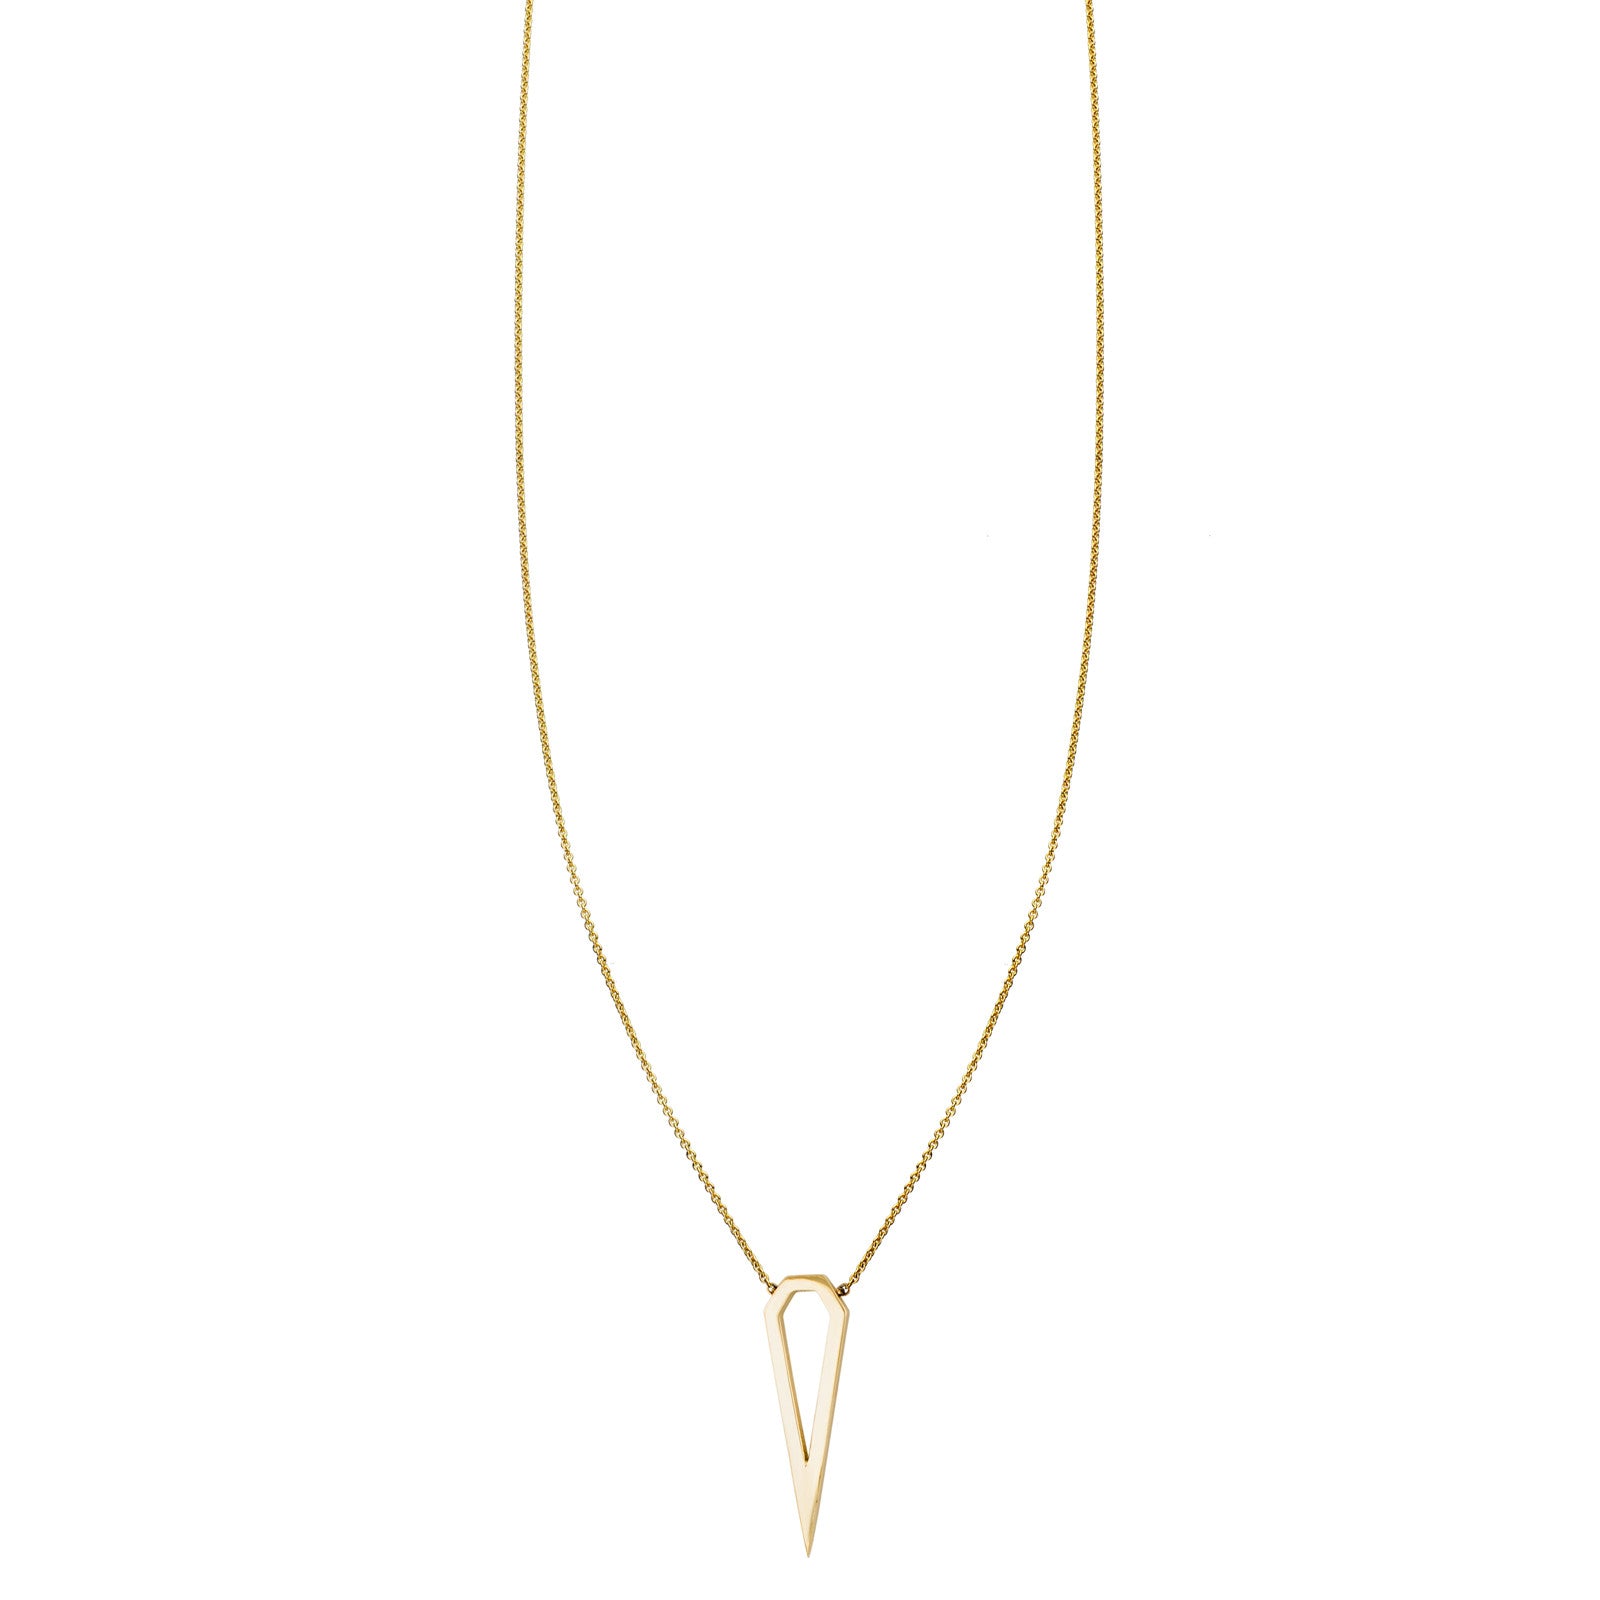 diamond outline dainty charm petite necklace 14k yellow gold PRN 364 14KY